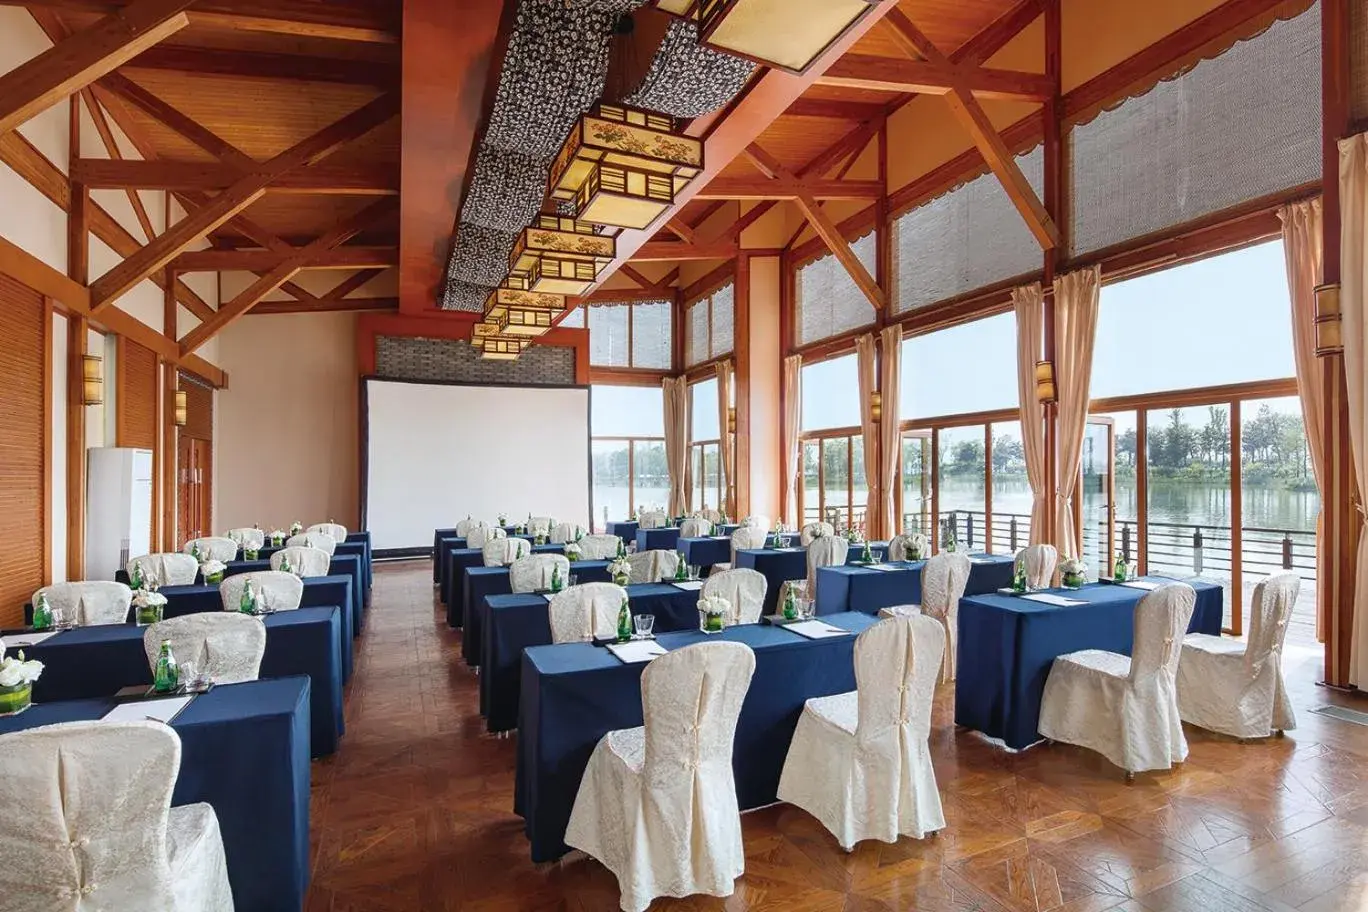 Banquet/Function facilities, Banquet Facilities in Fairmont Yangcheng Lake Kunshan